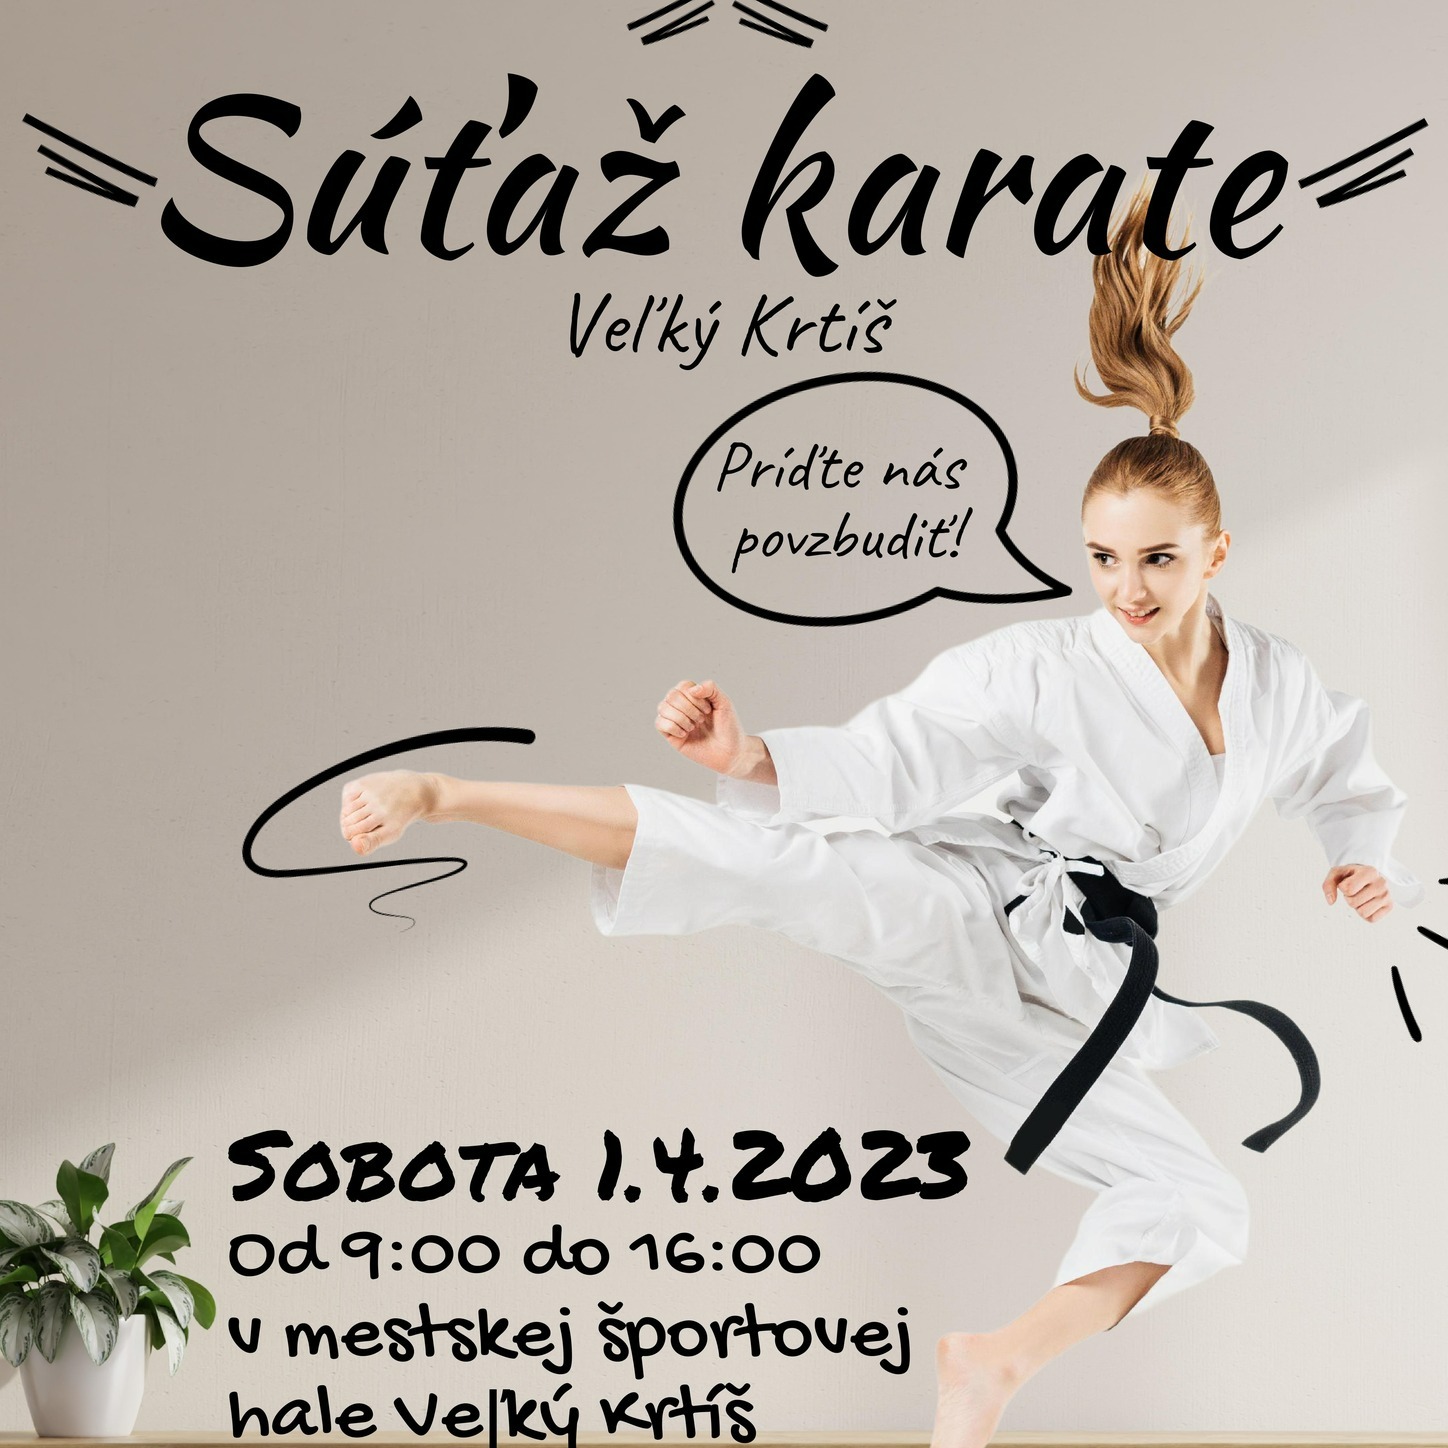 karate sutaz krtis